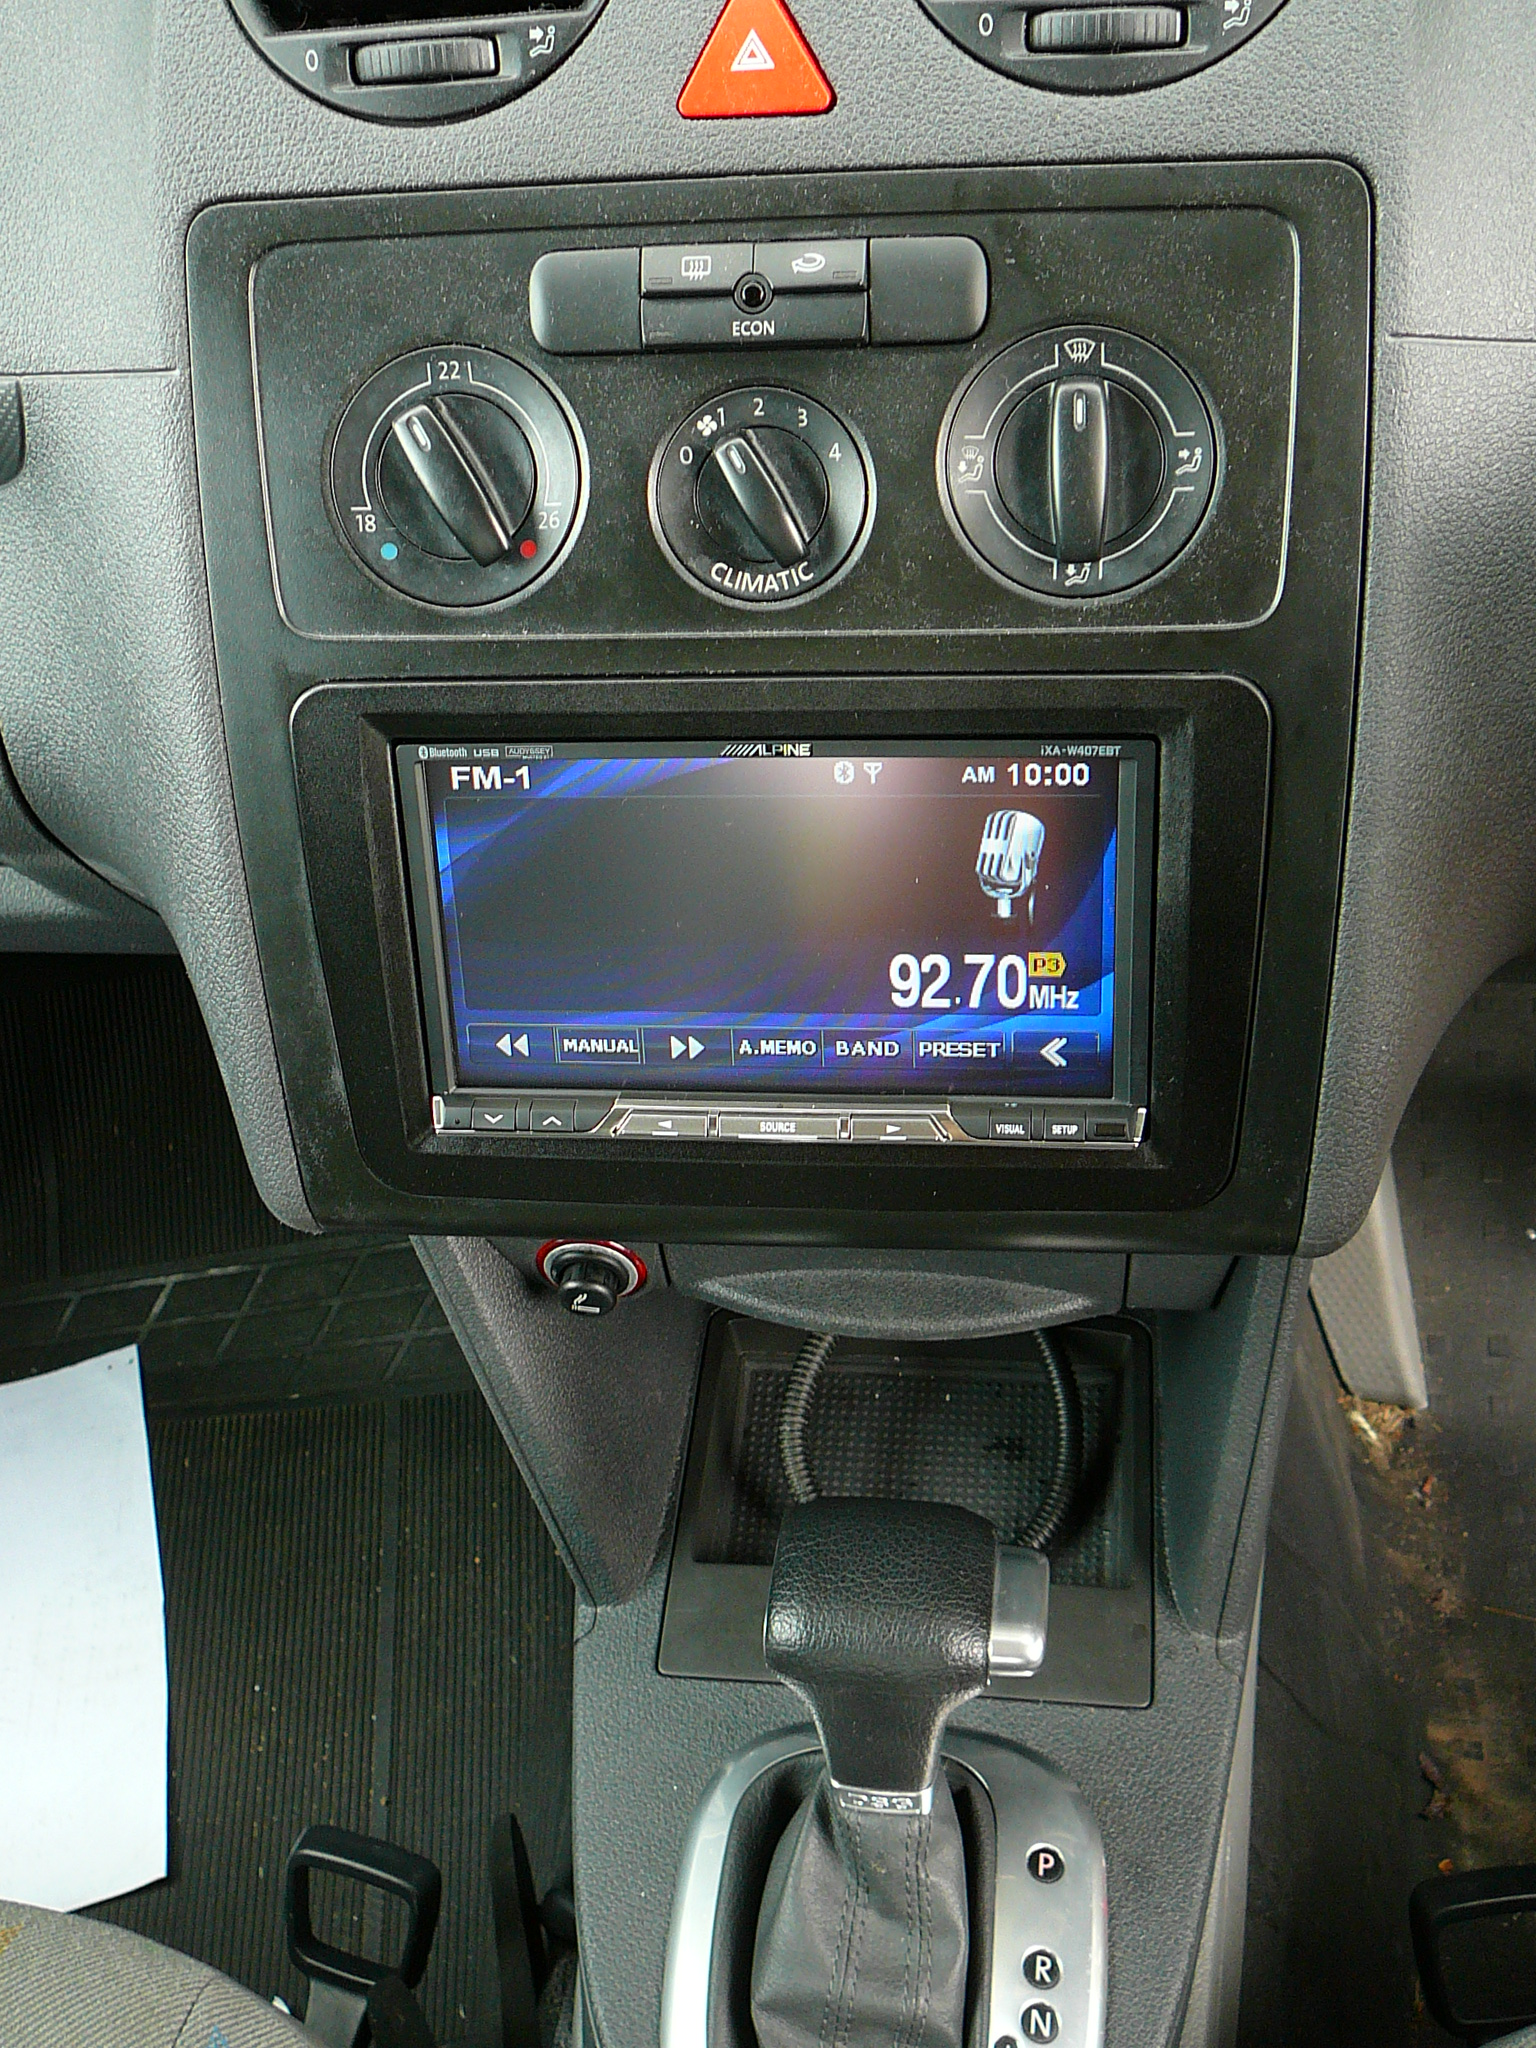 VW Caddy Indash Bluetooth Handsfree system, USB, iPod, iPhone